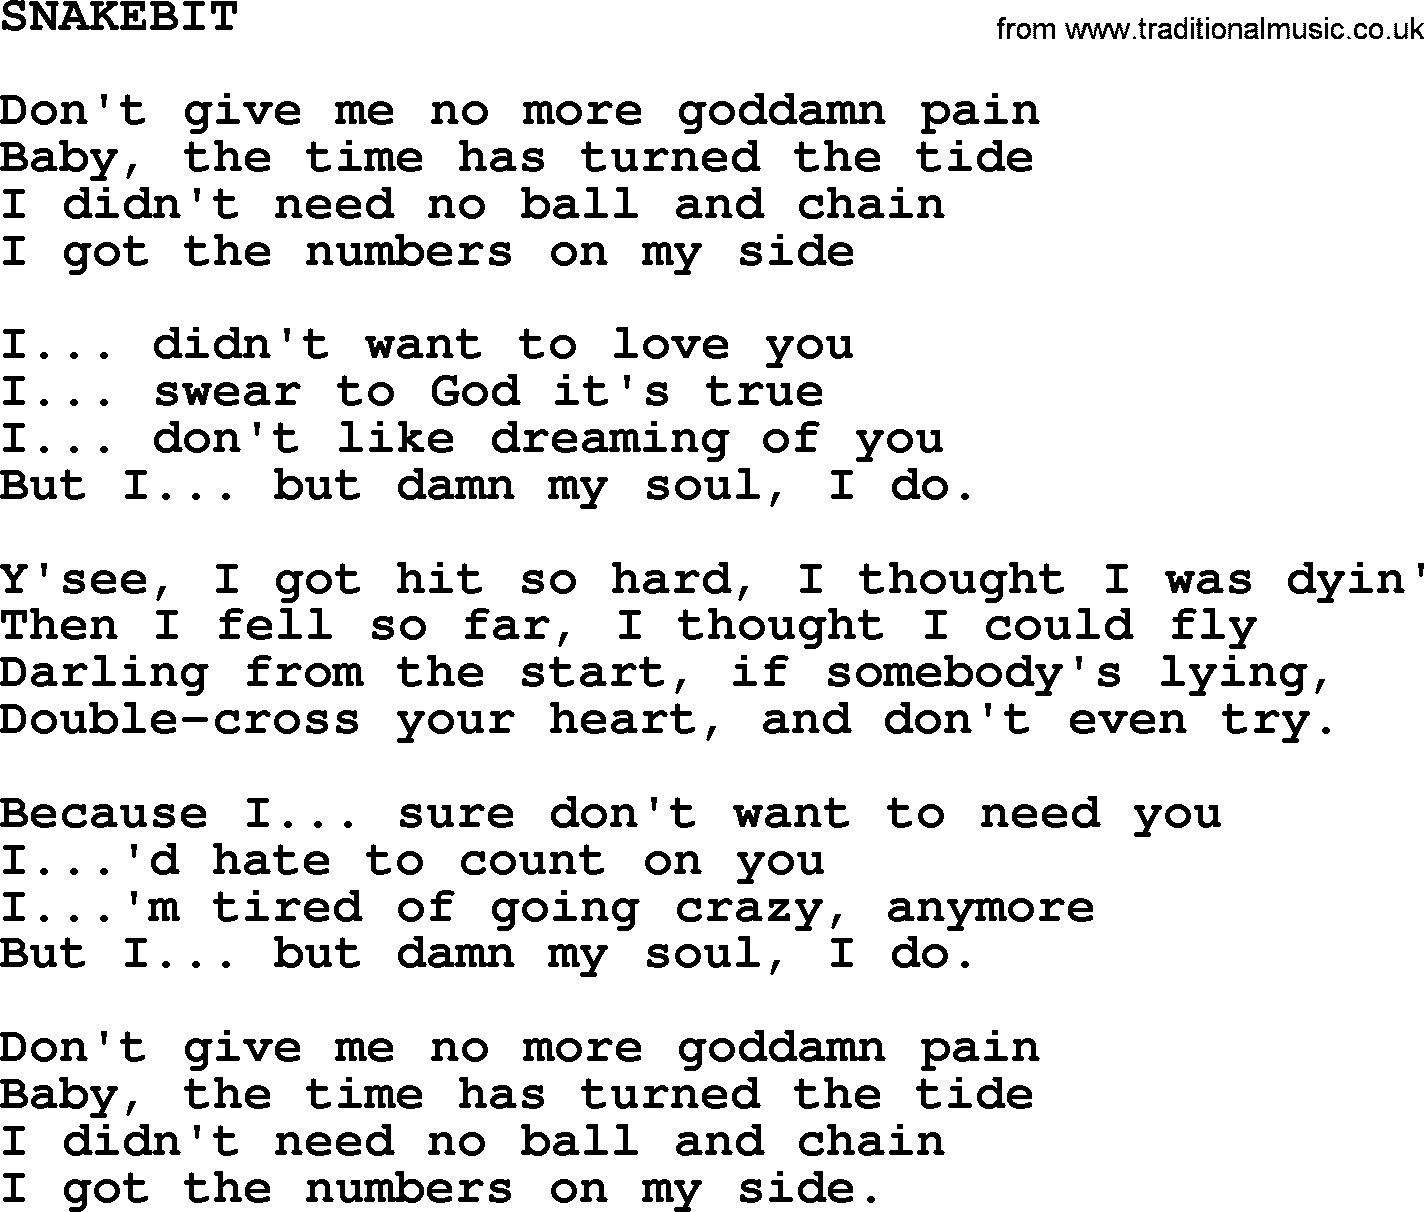 Kris Kristofferson song: Snakebit lyrics